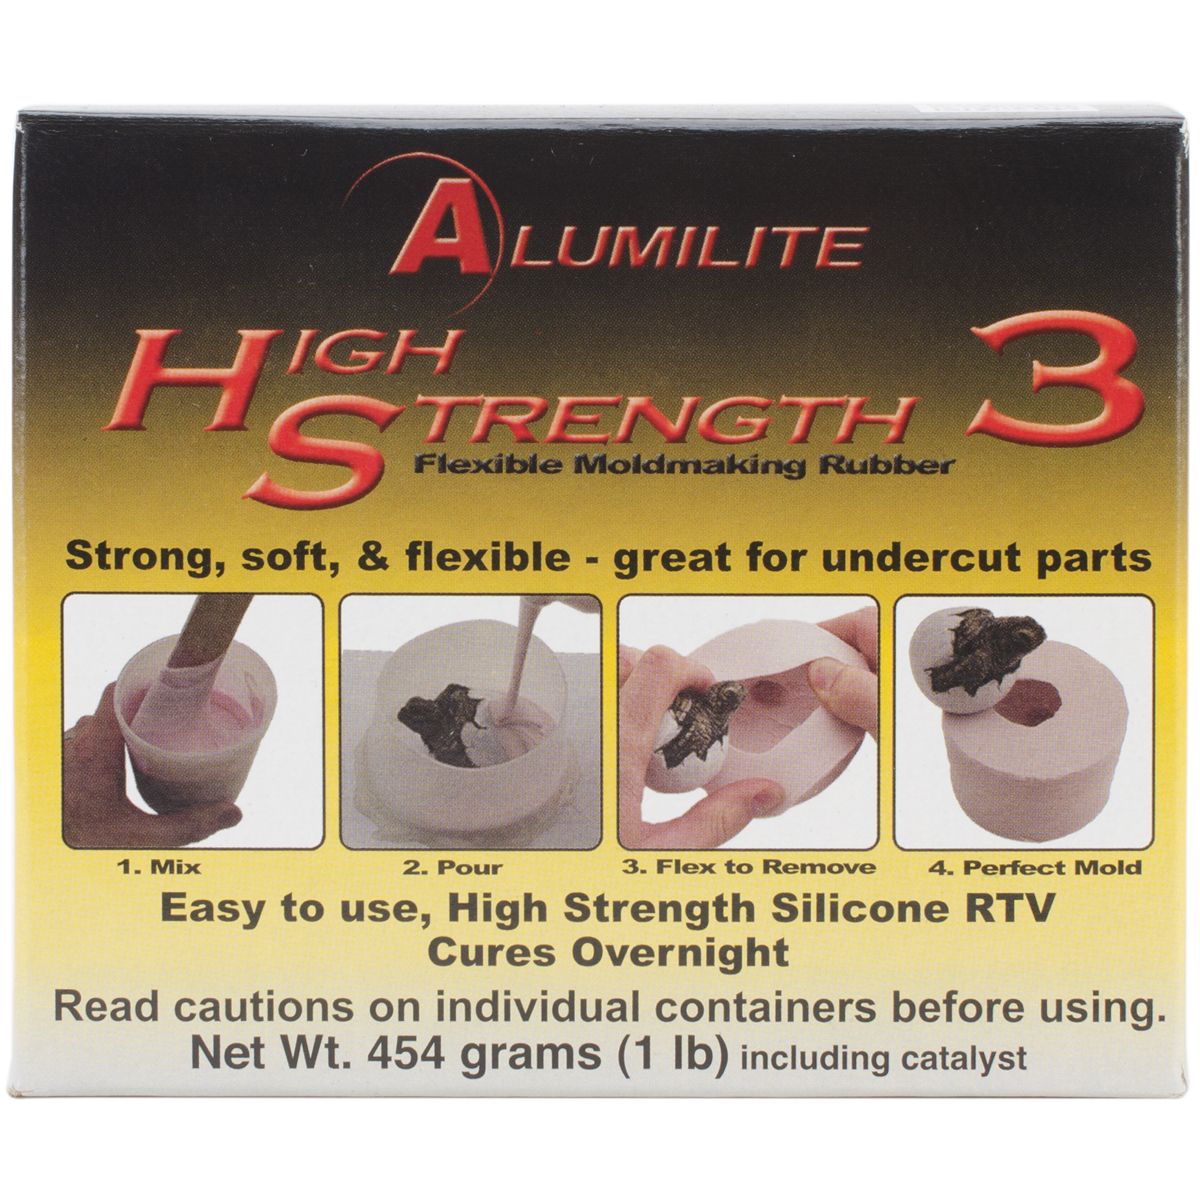 Alumilite High Strength 3 Liquid Mold Making Rubber 1lb - Pink